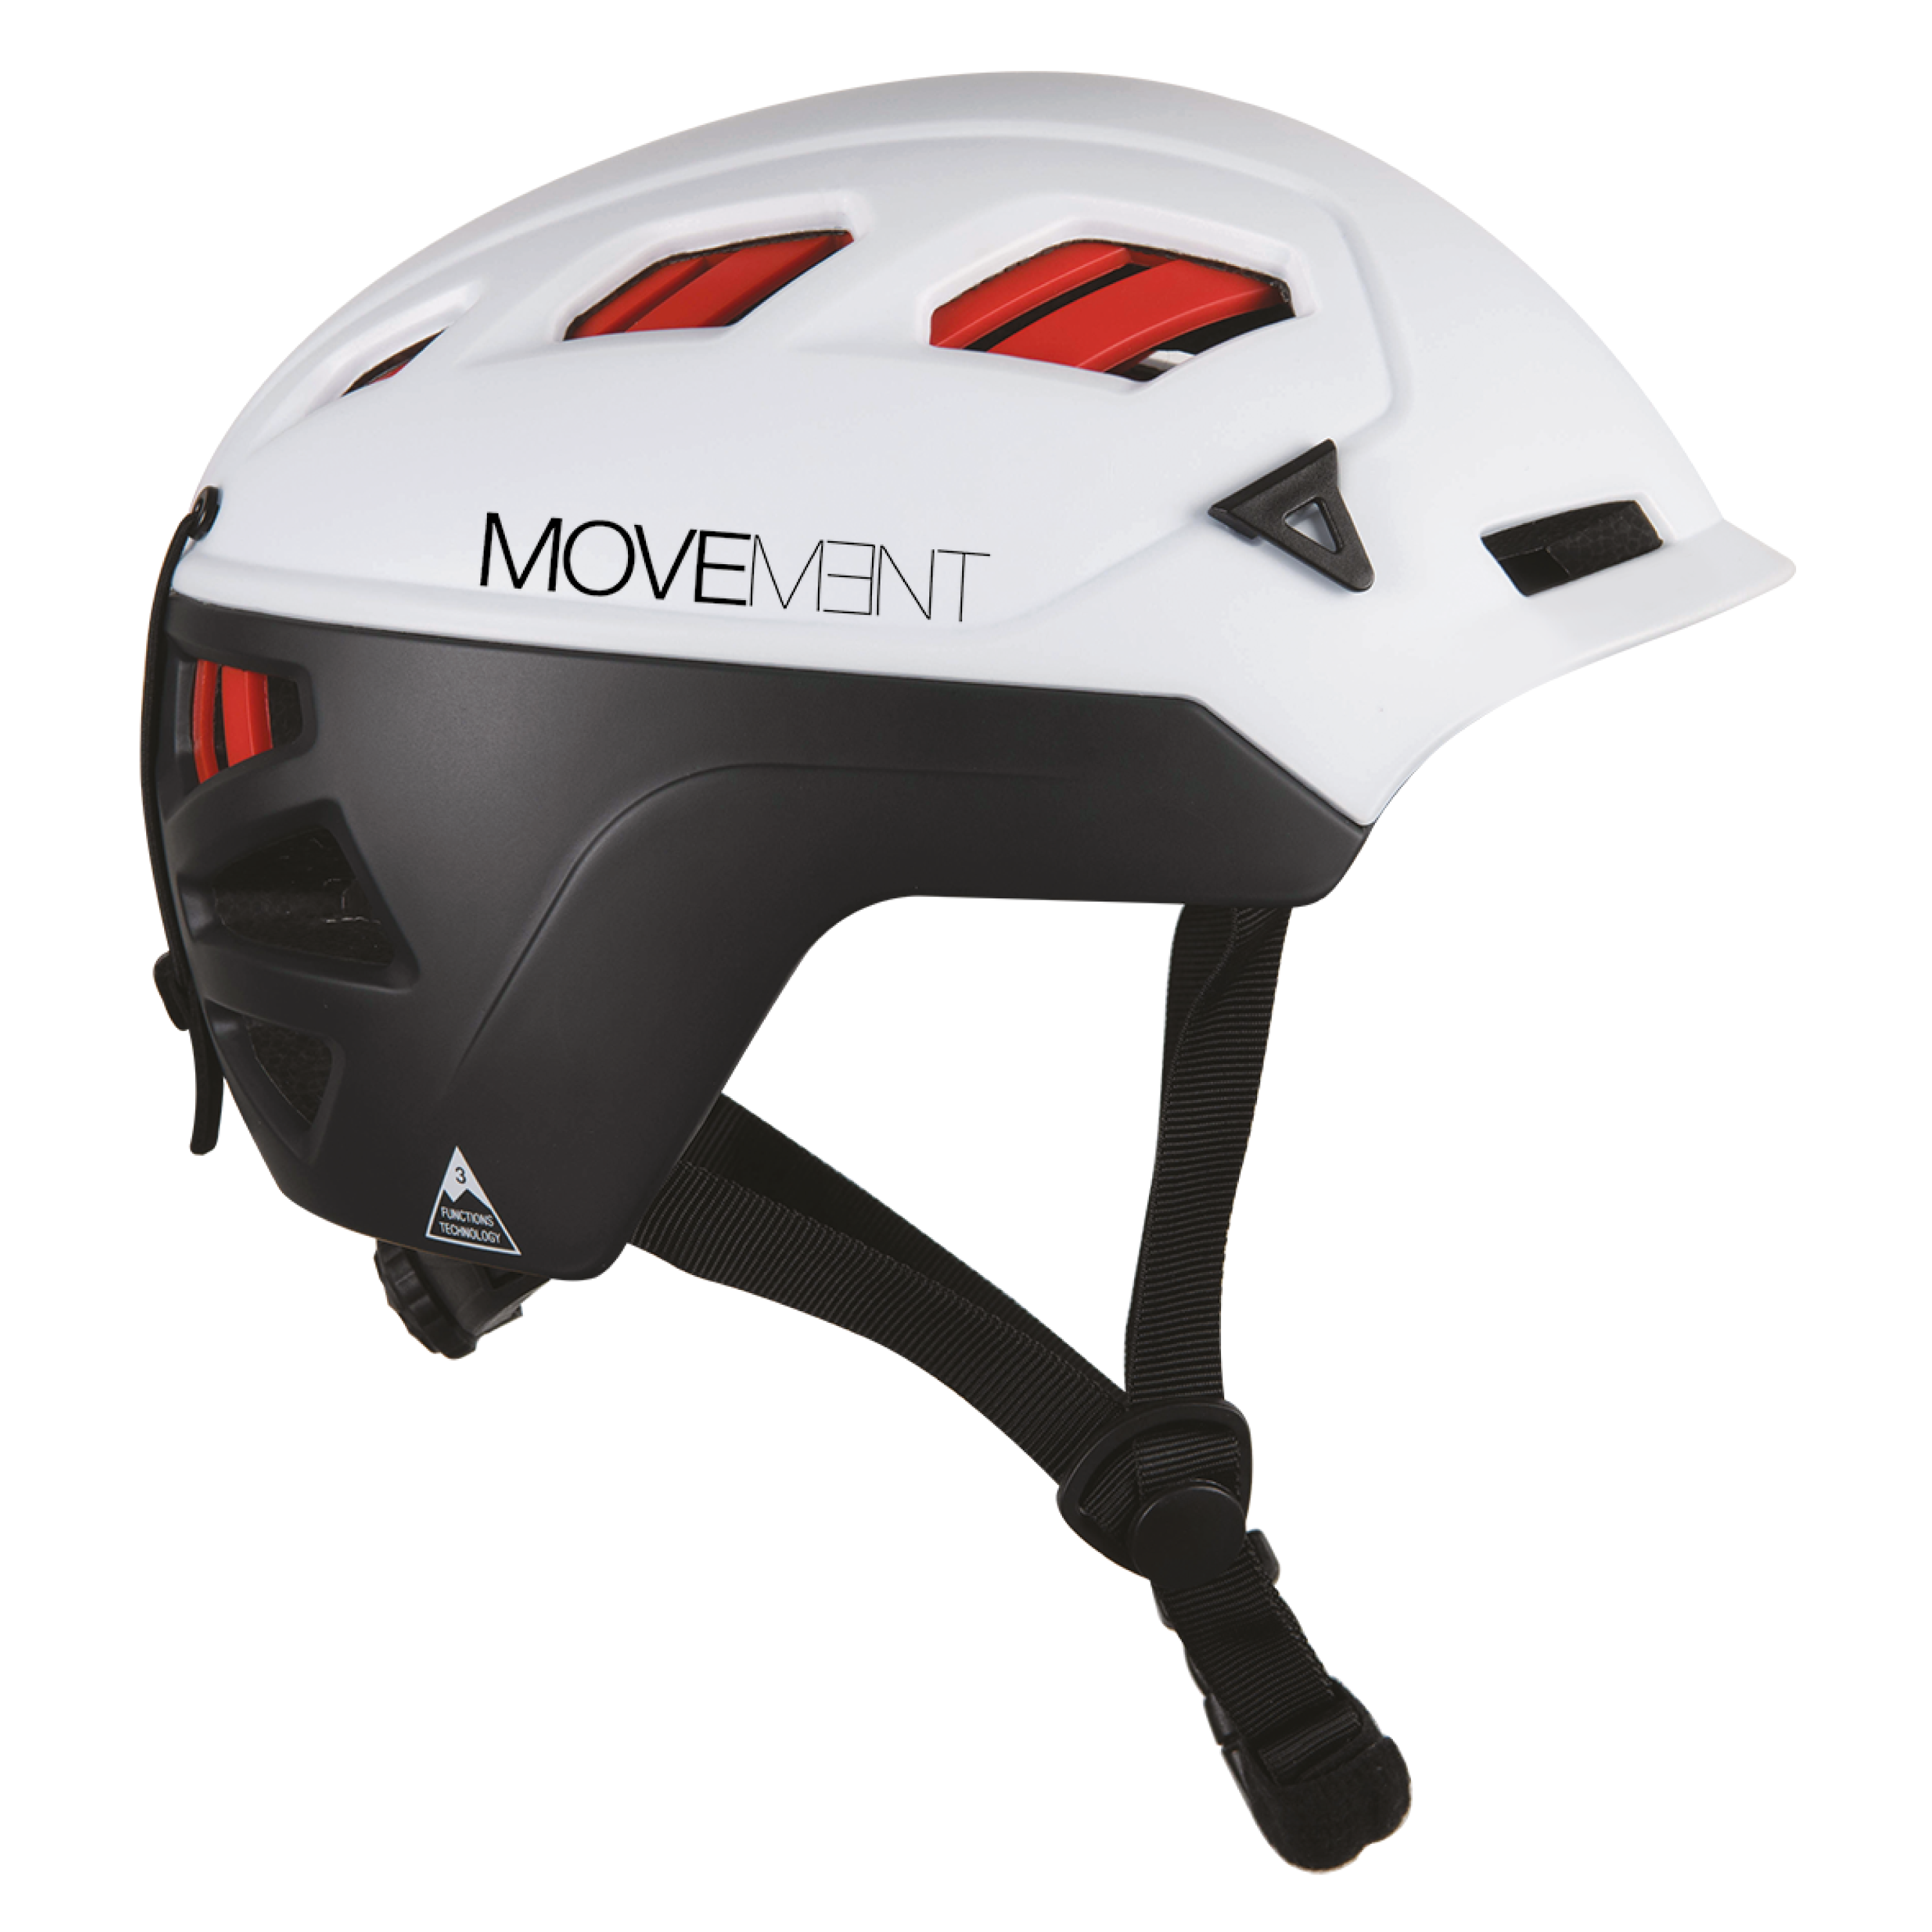 Casque de Ski de Randonnée 3 Tech Alpi Helmet - Charcoal White Red